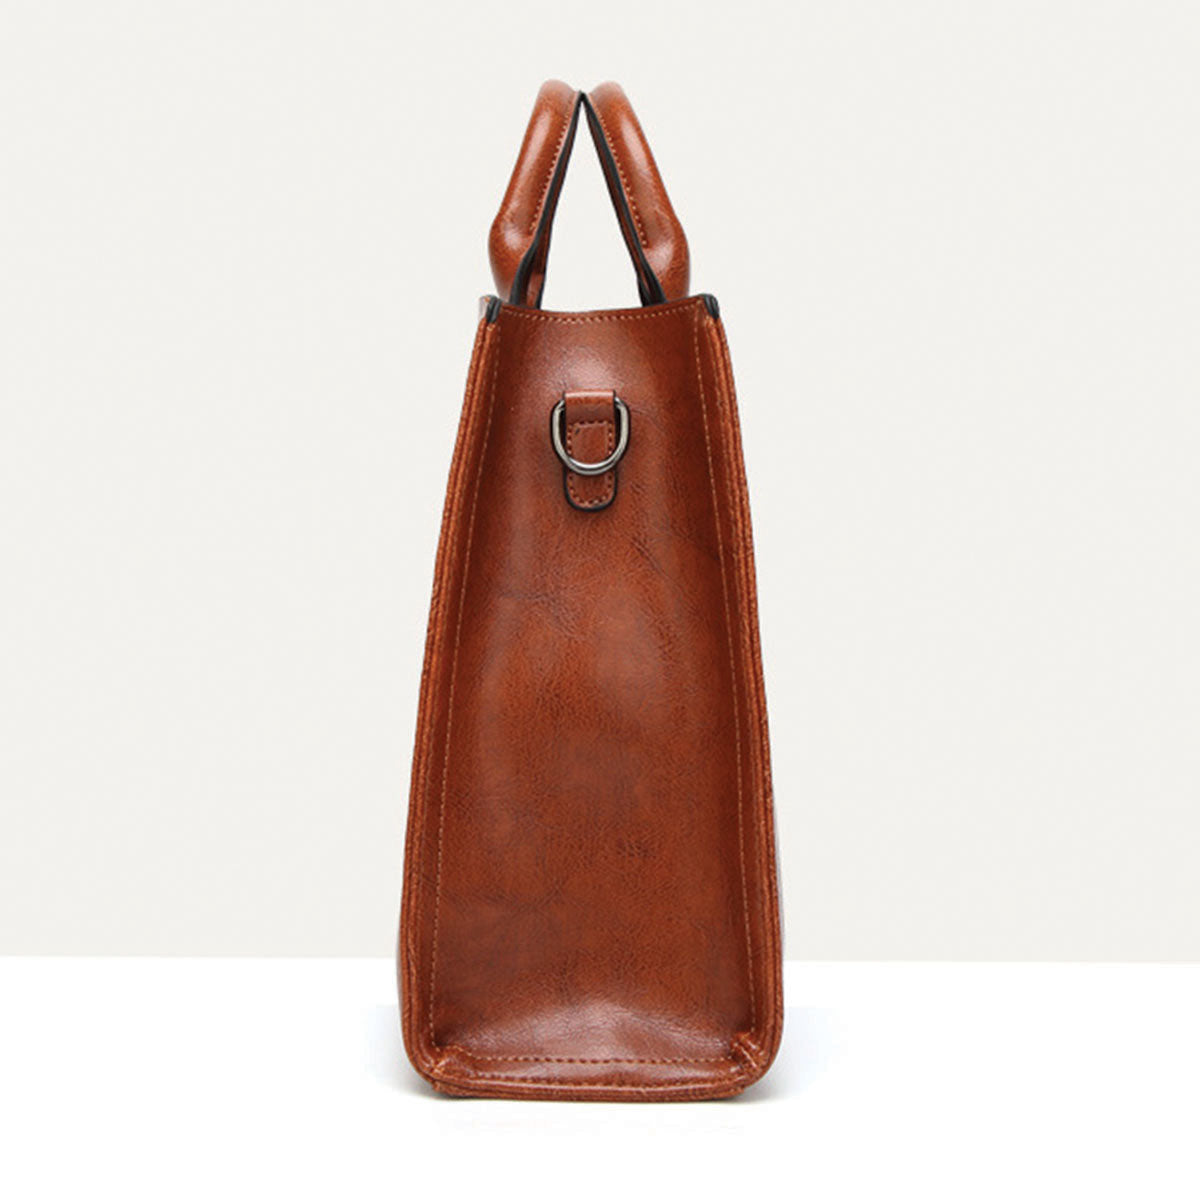 Your Best Companion - English Cocker Spaniel Luxury Handbag V1